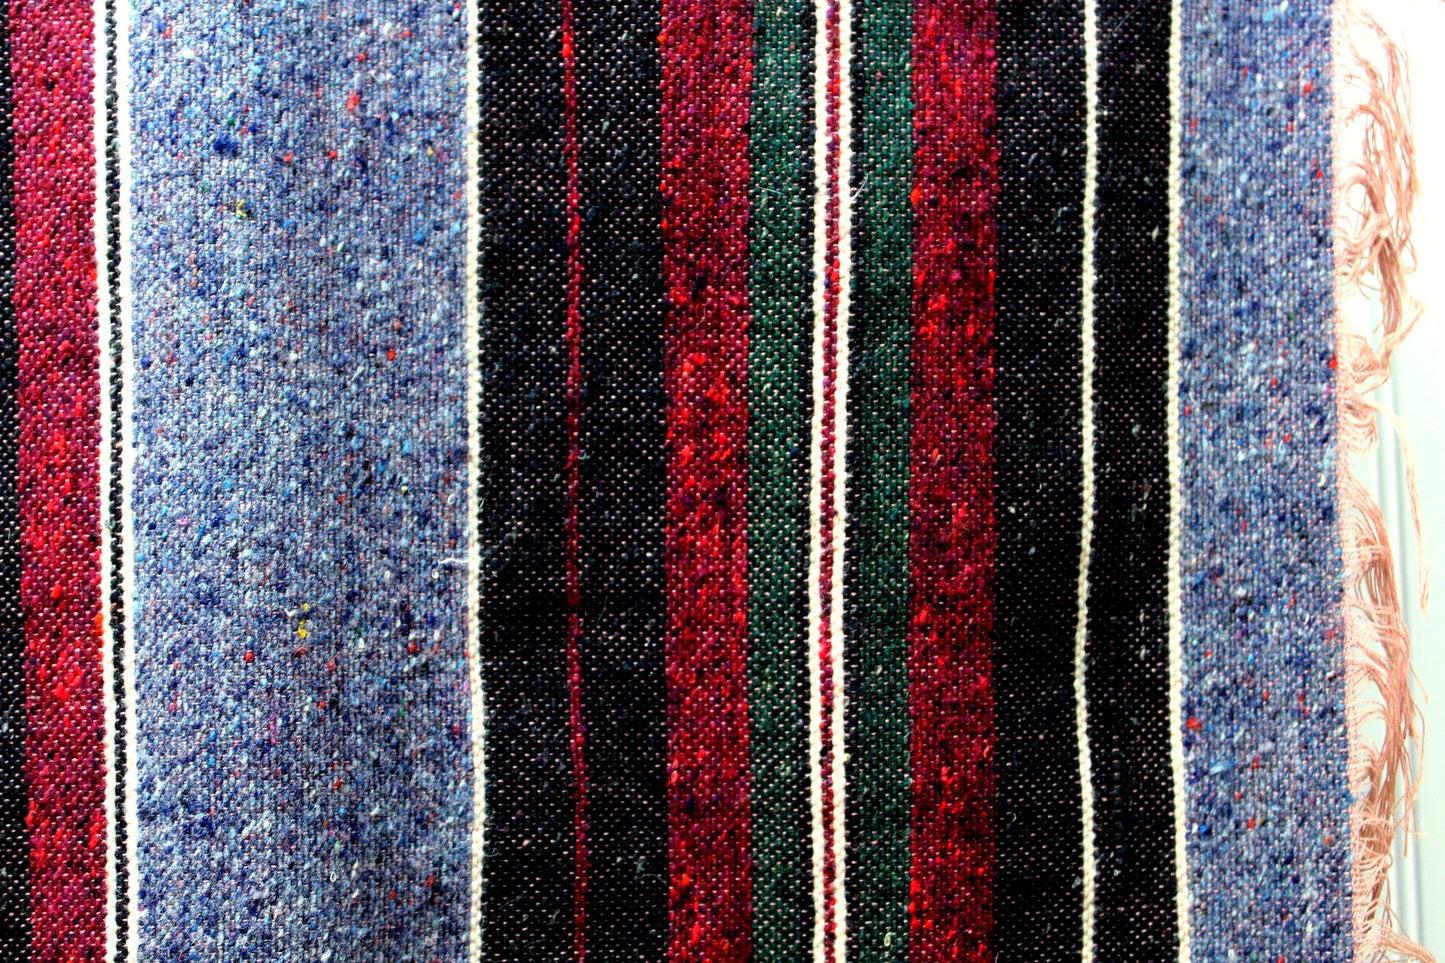 Fringed Blanket Travel Rug Loomed Dense Blues Purples Stripe 80" X 58" Decor OOAK decorator item